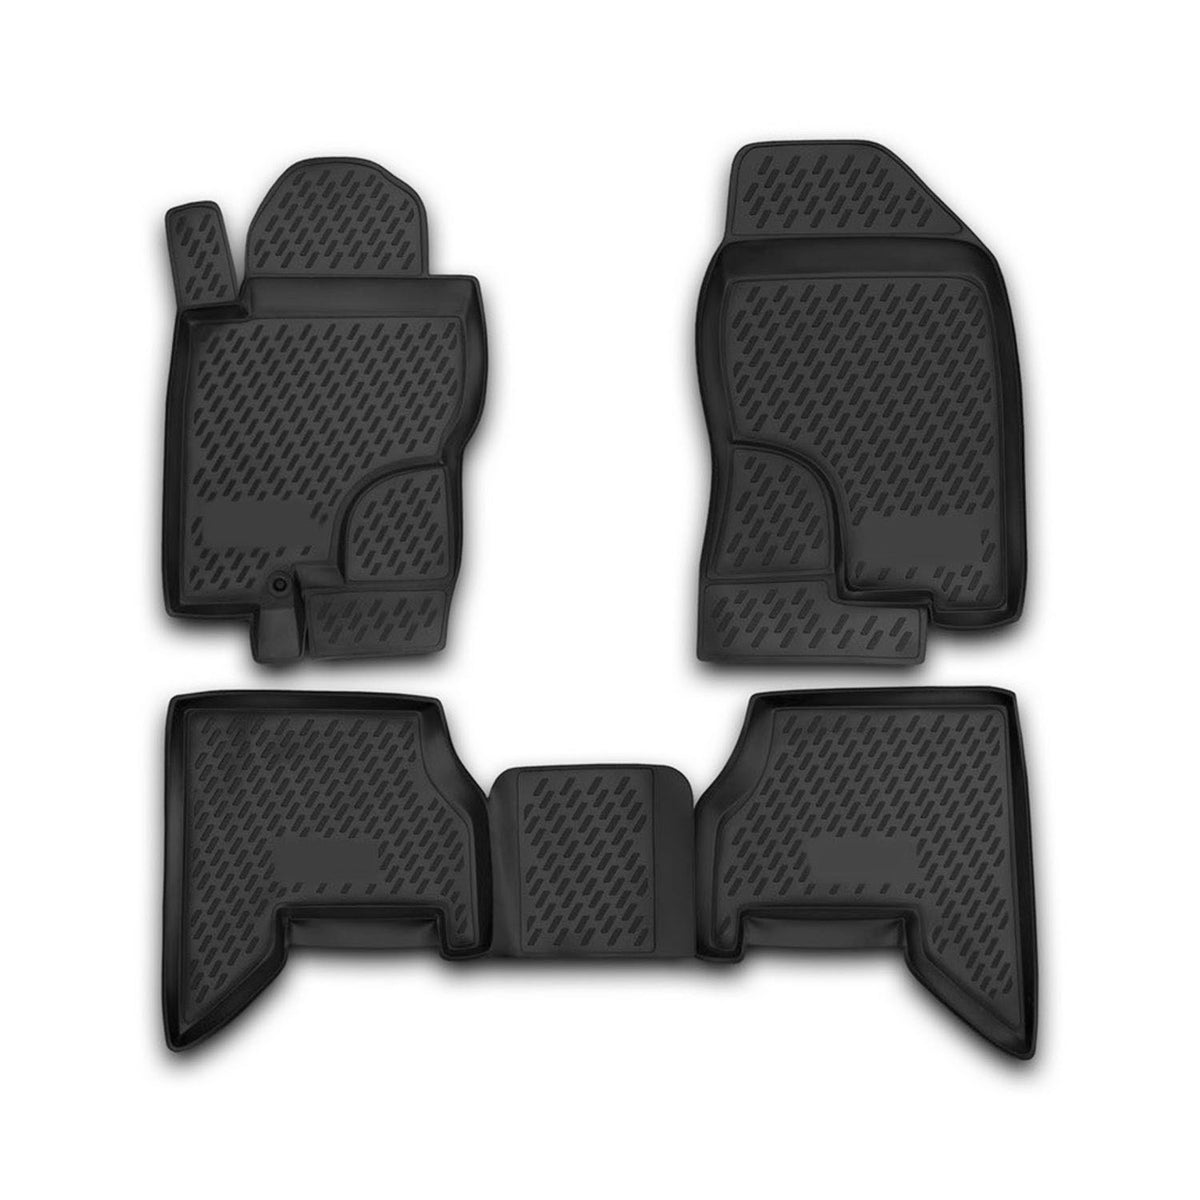 OMAC rubber floor mats for Nissan Pathfinder R51 2004-2013 TPE black 4x